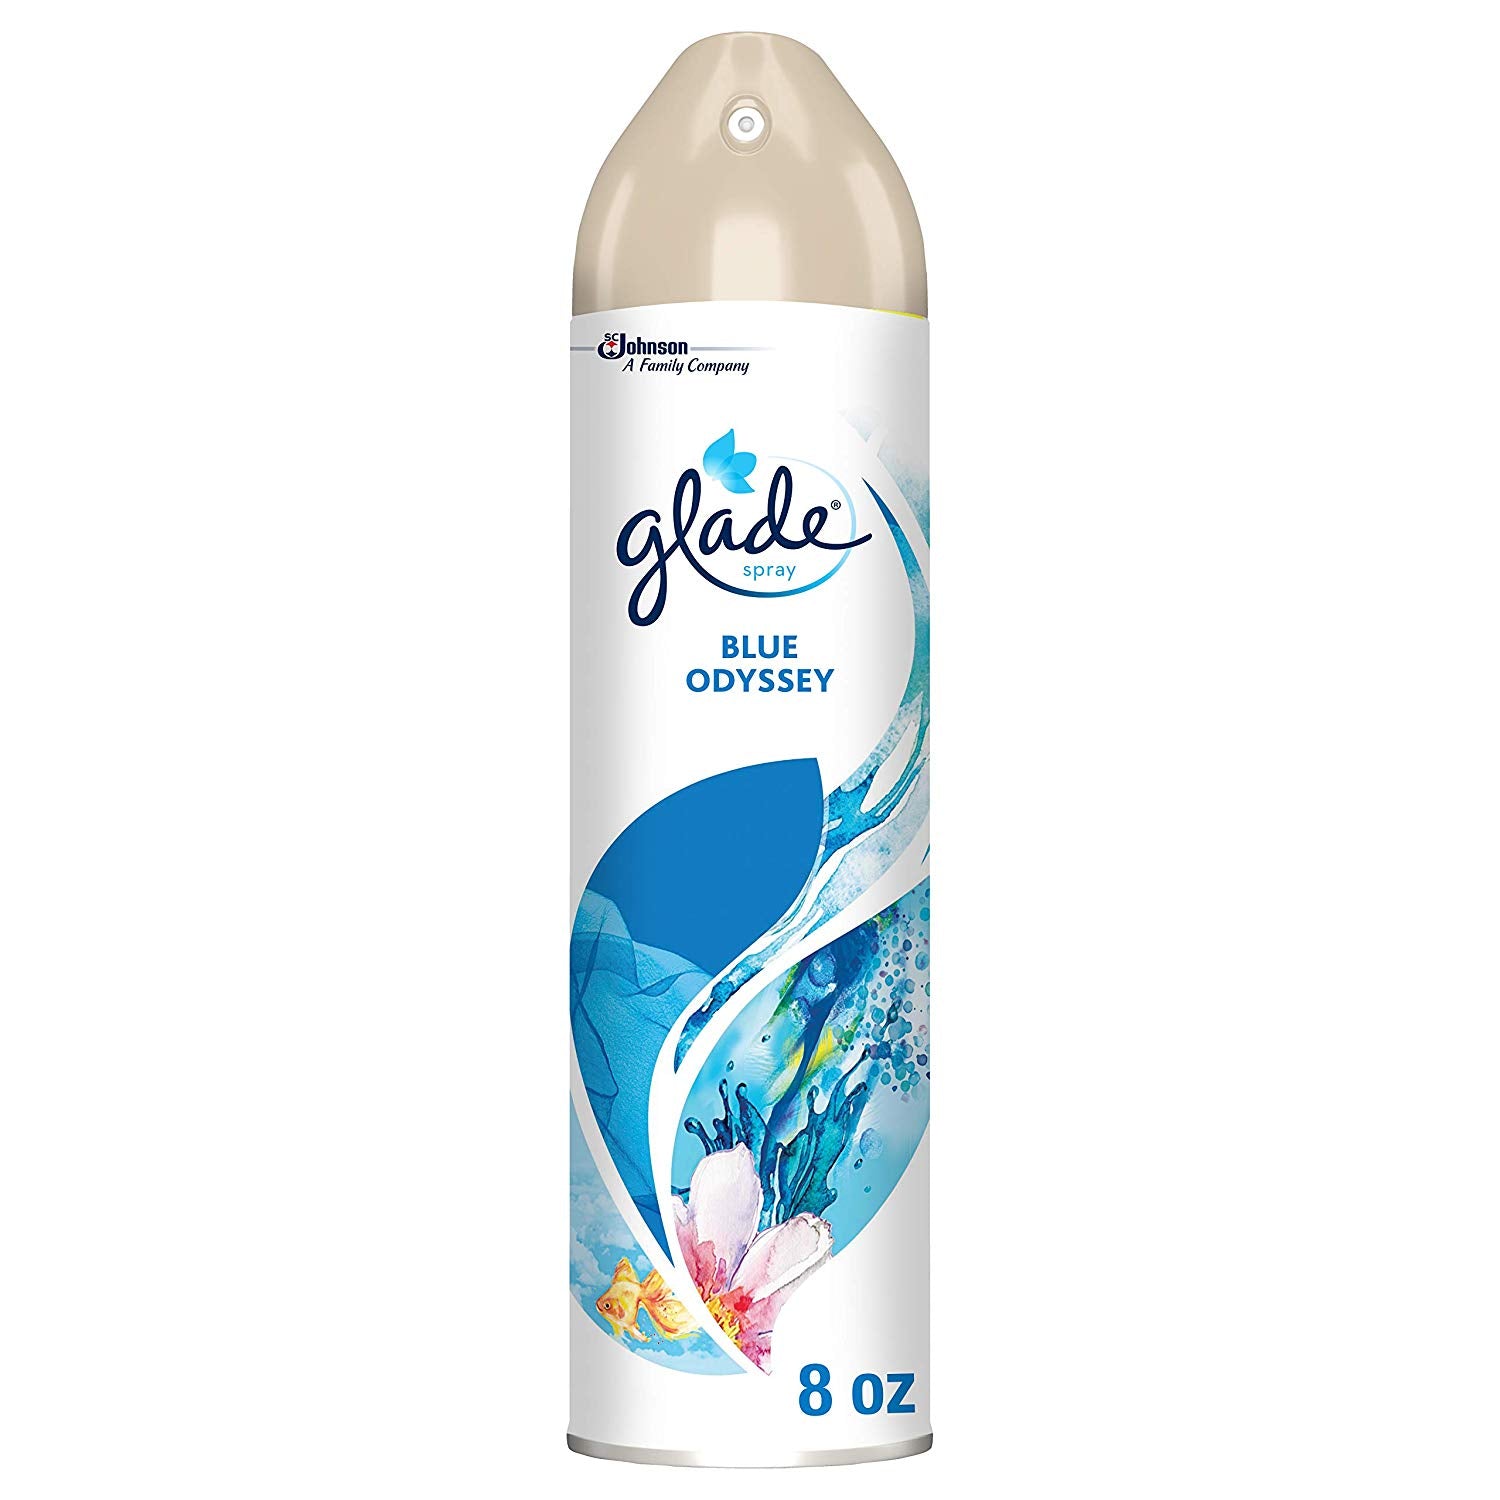 bel>Glade Spray Air Freshener, 8 oz